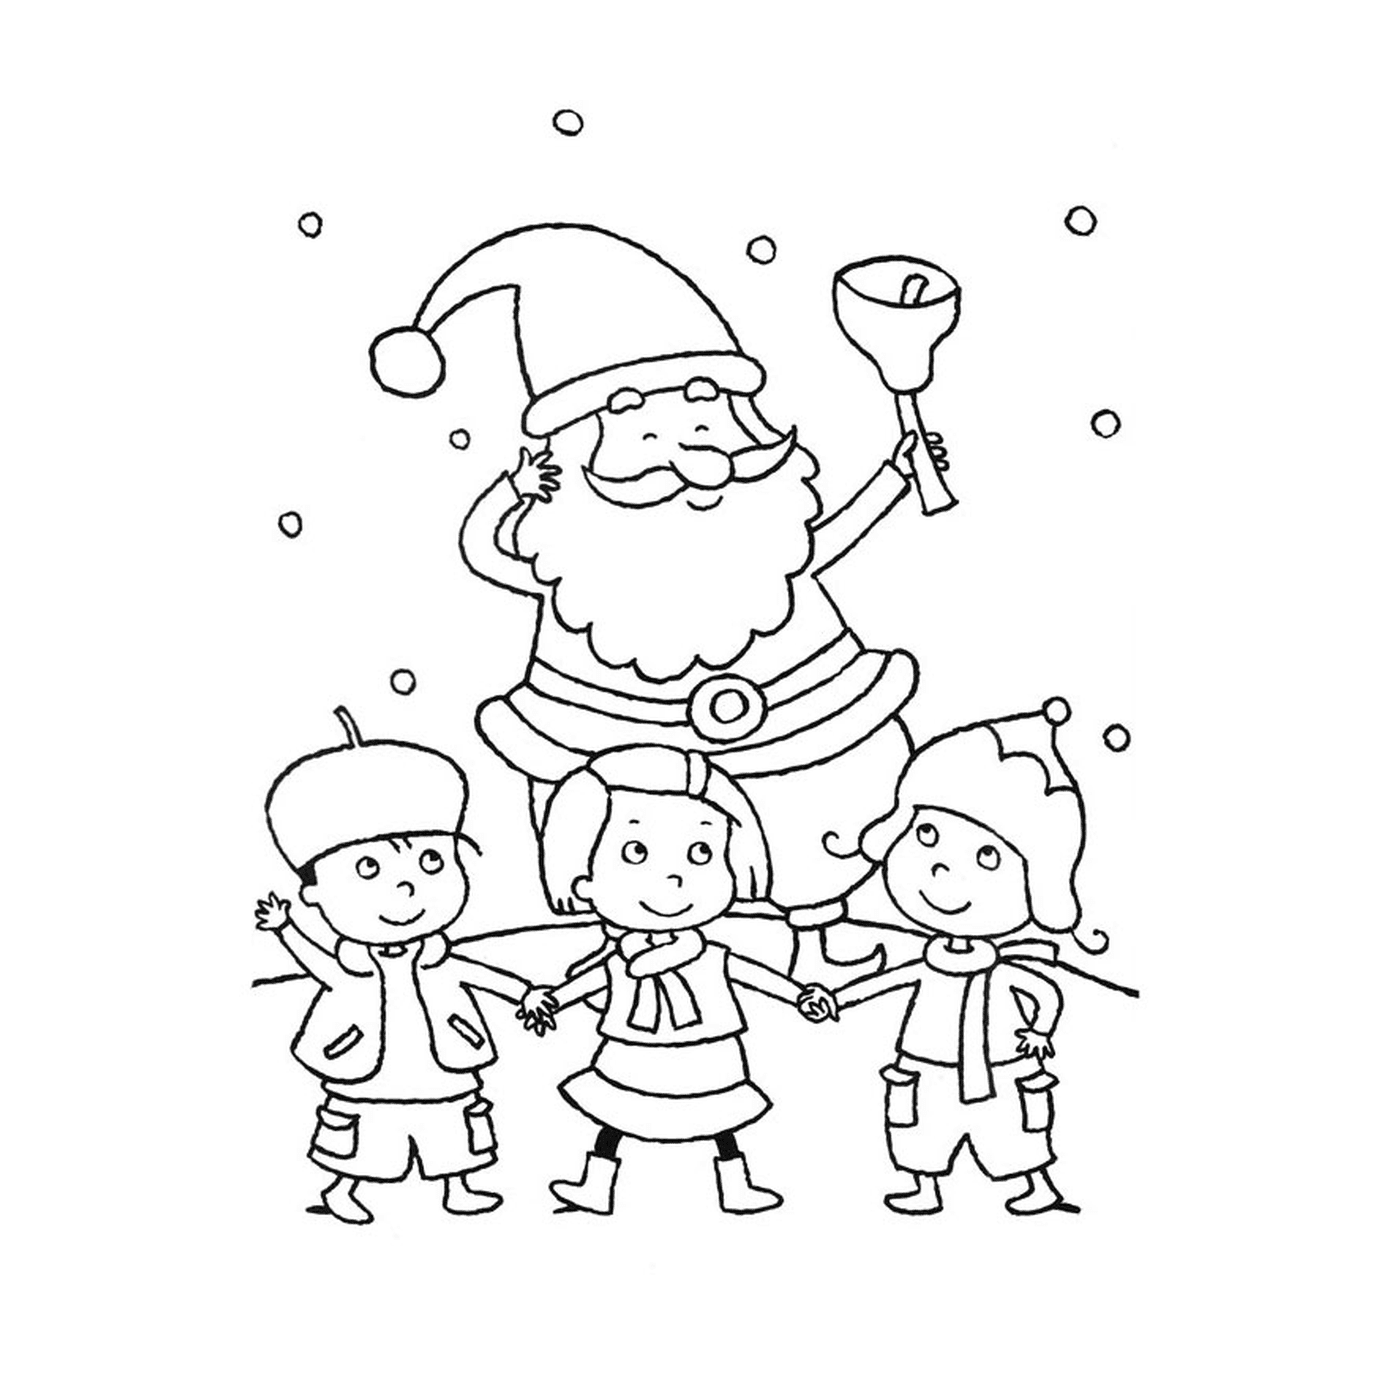  niños que rodean a Santa Claus 